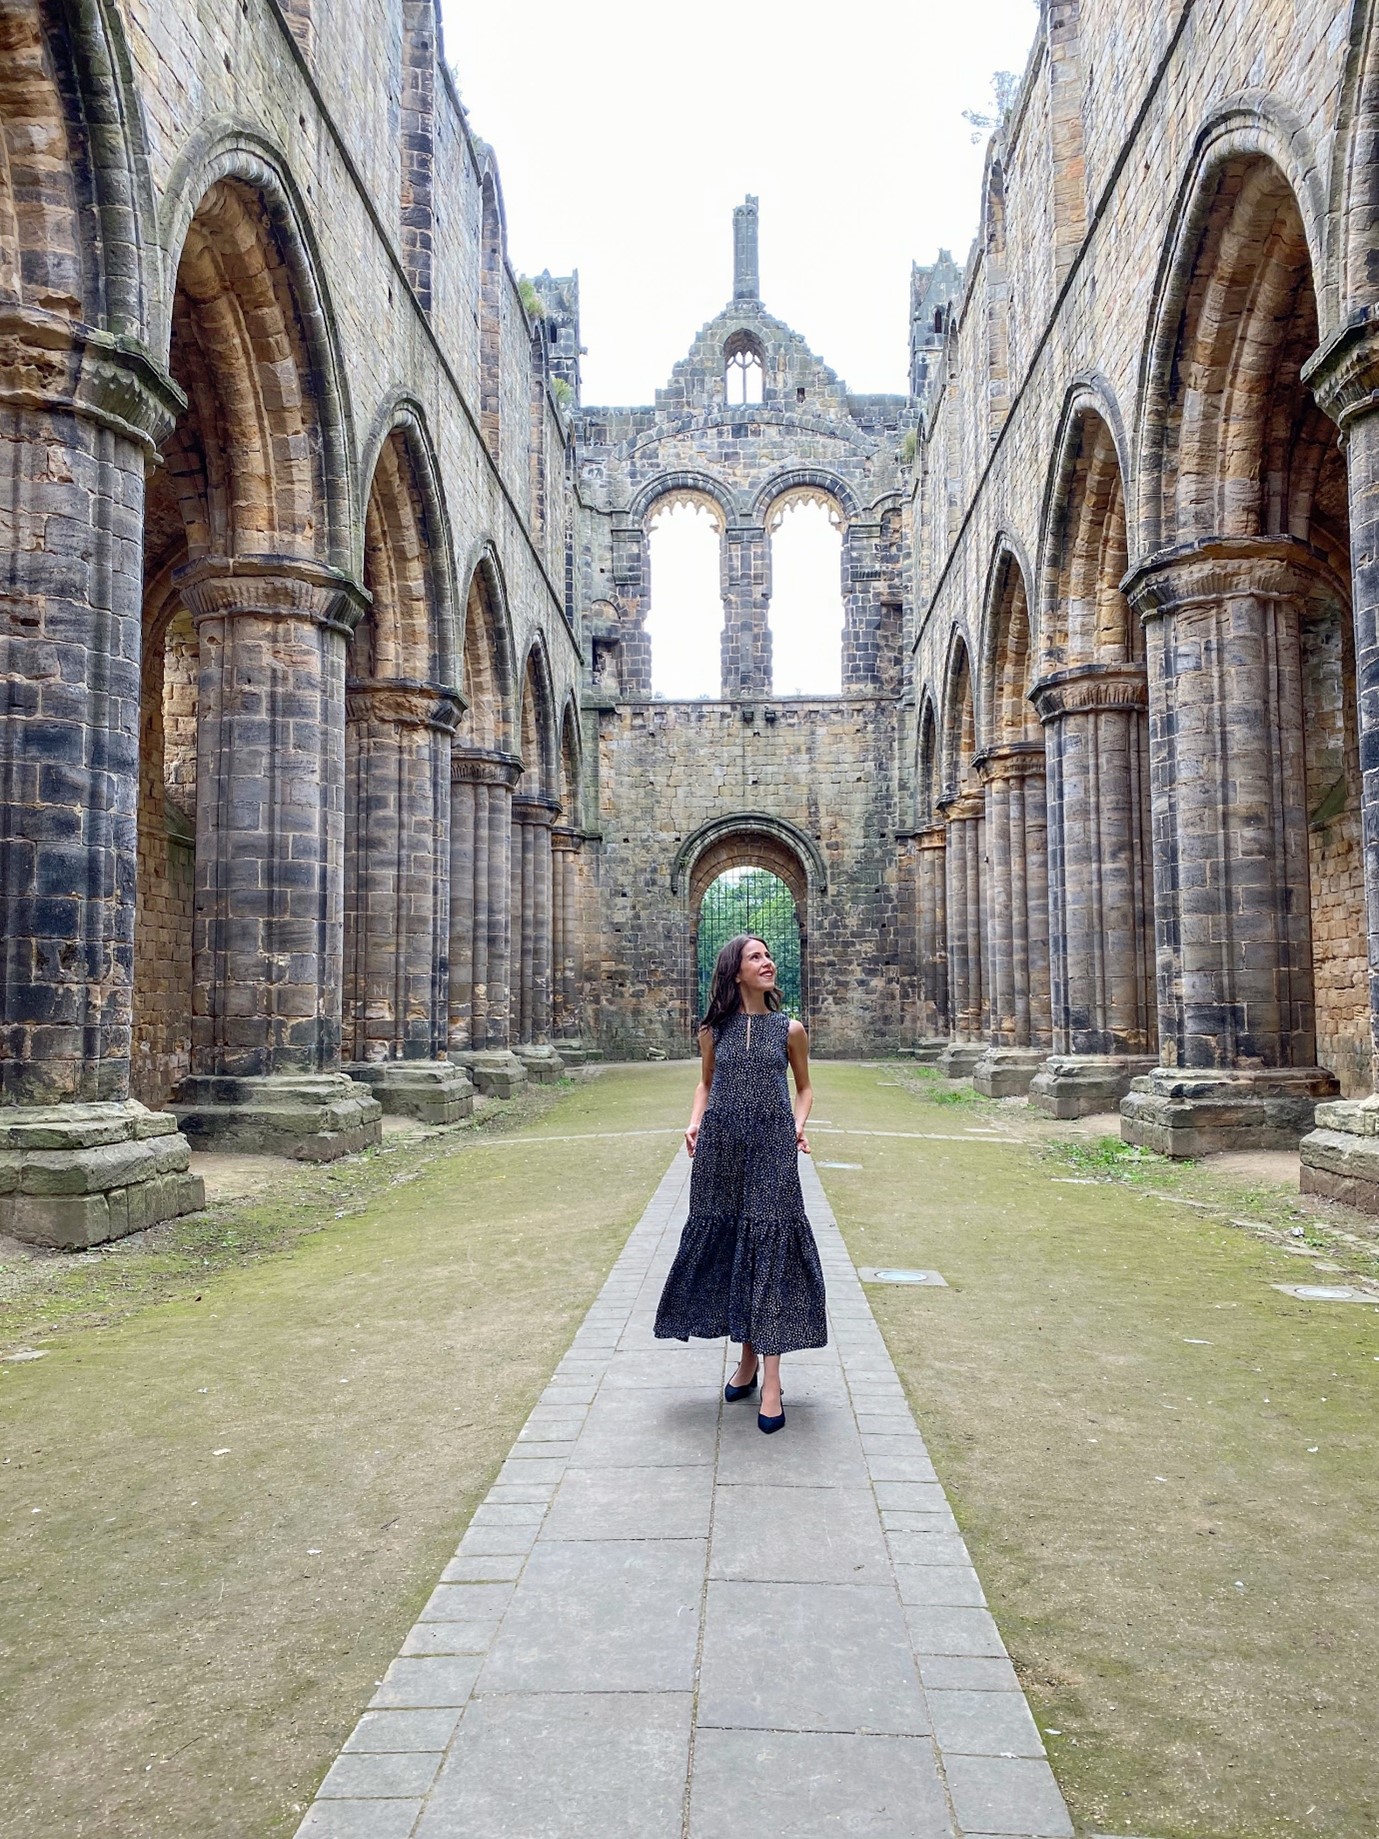 Woman stood among the ruins of Kirkstall Abbey